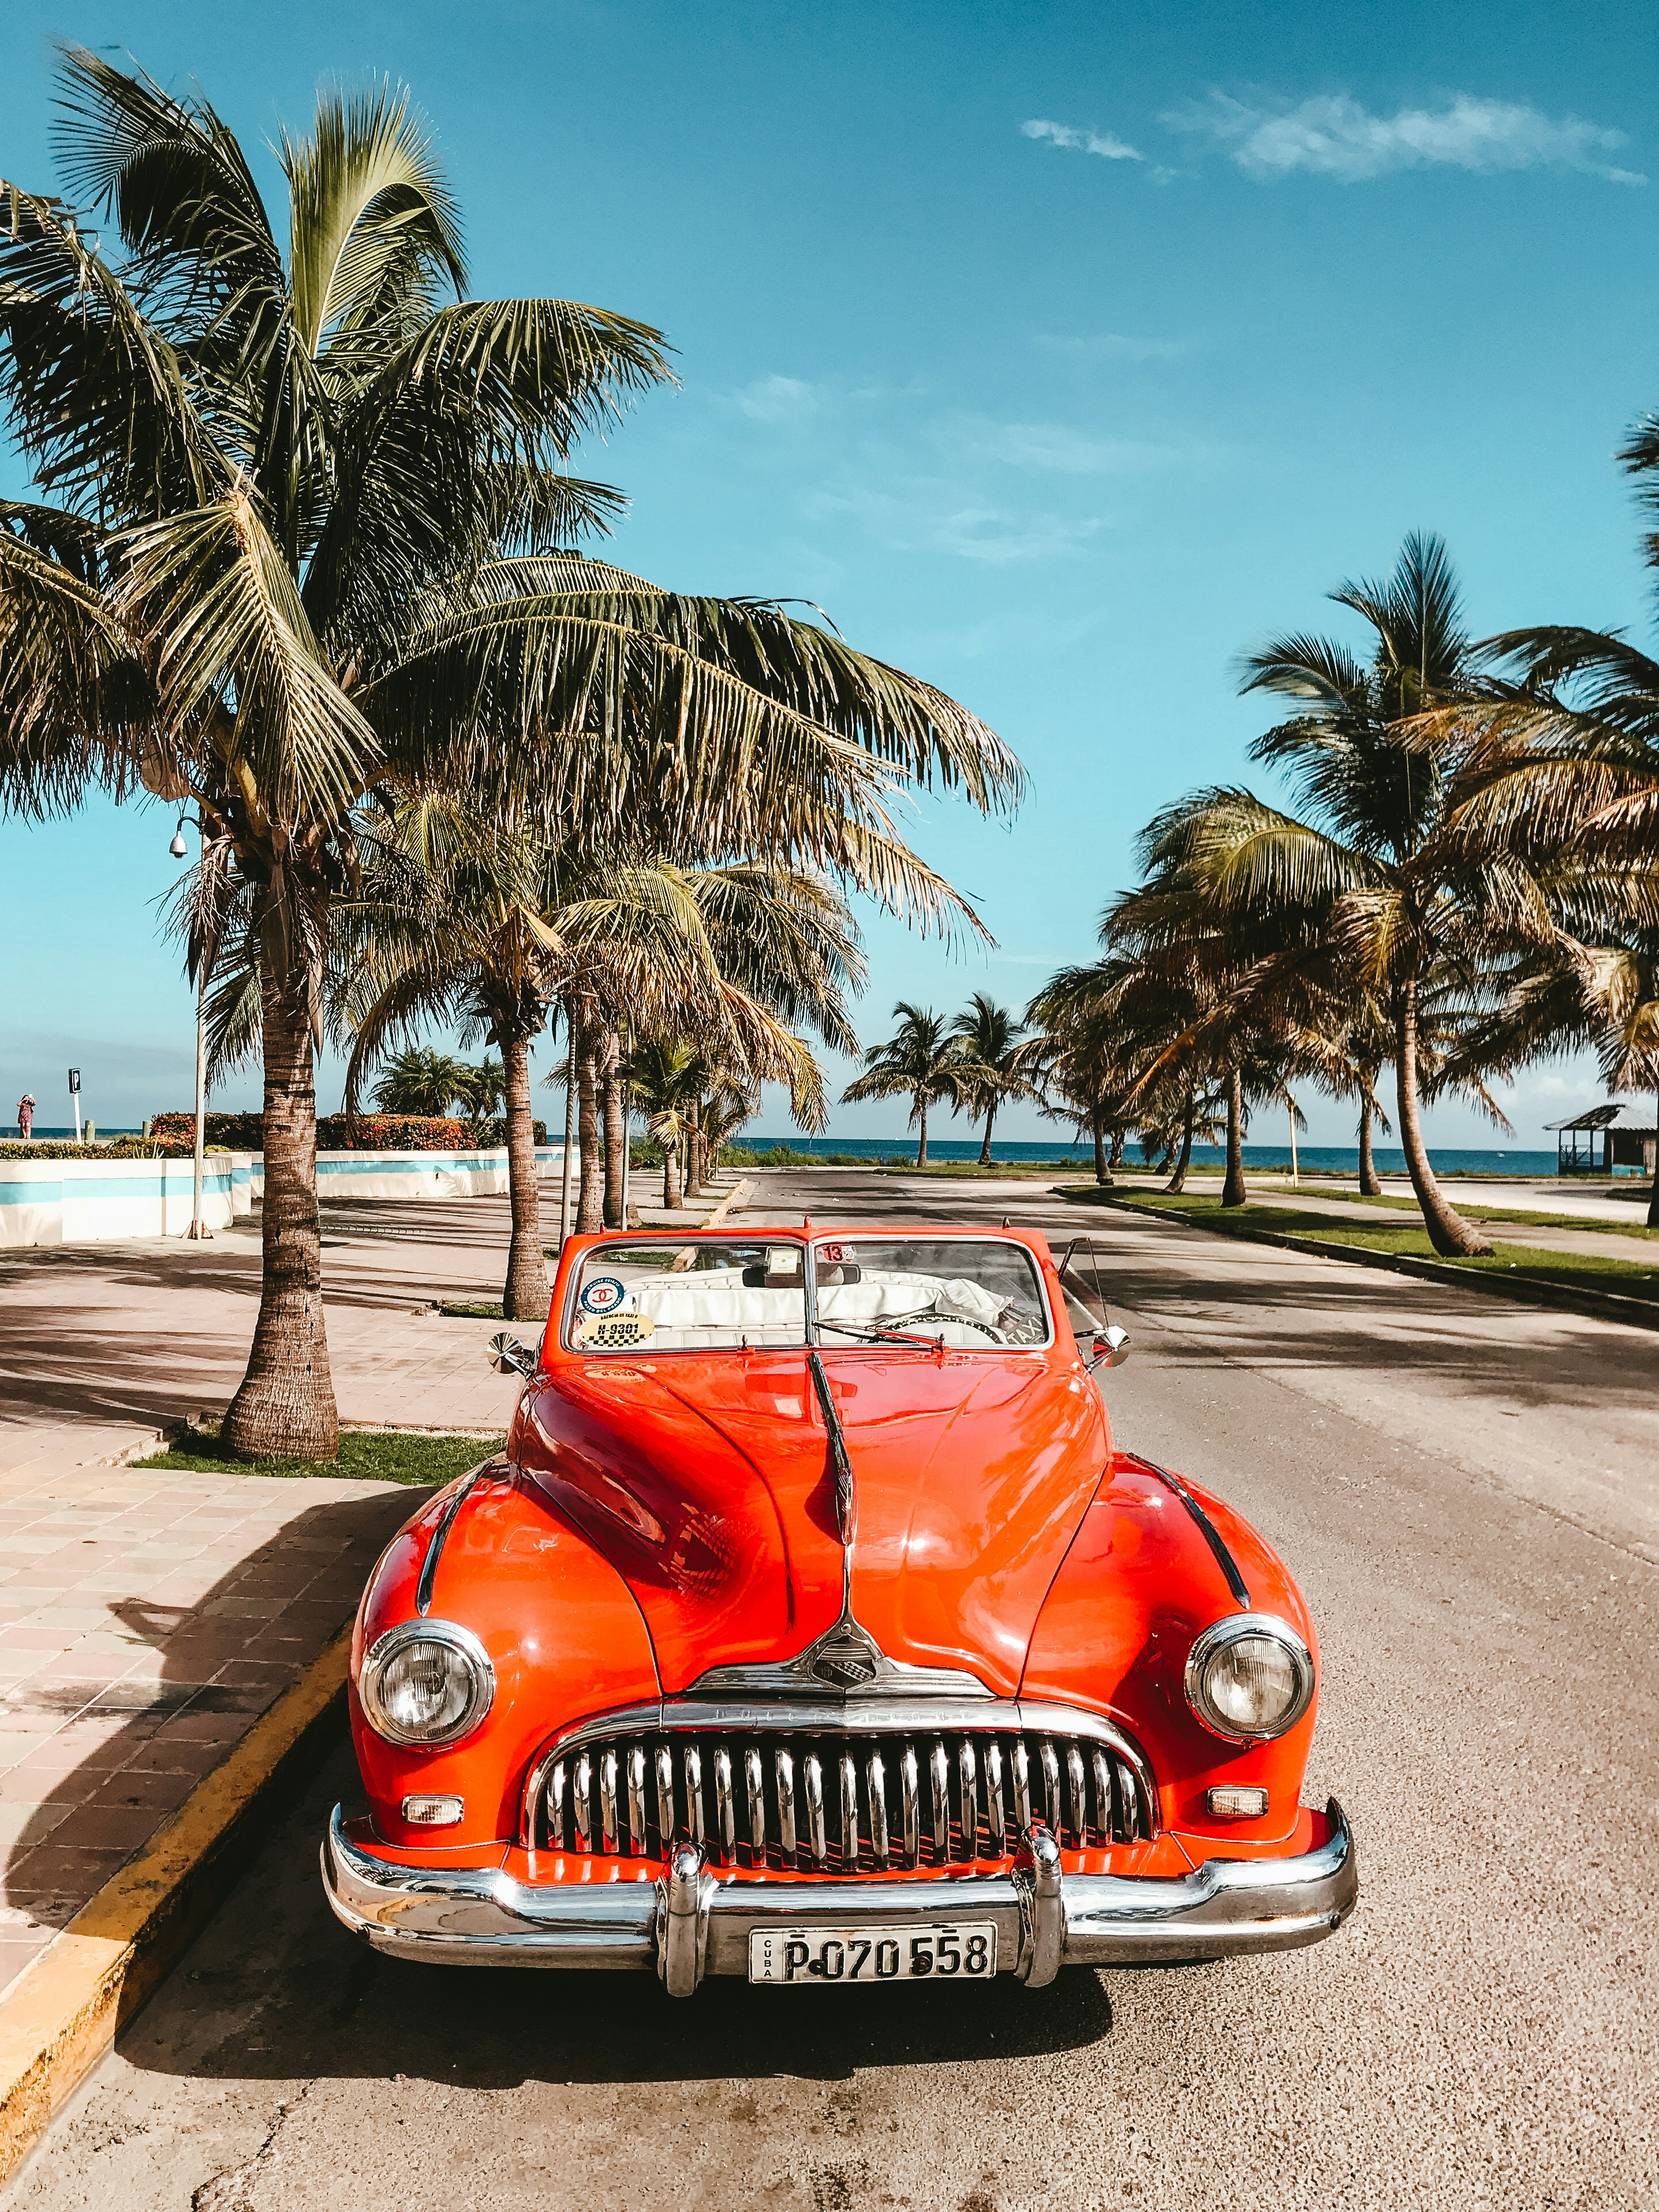 Typical old car in La Habana, Cuba